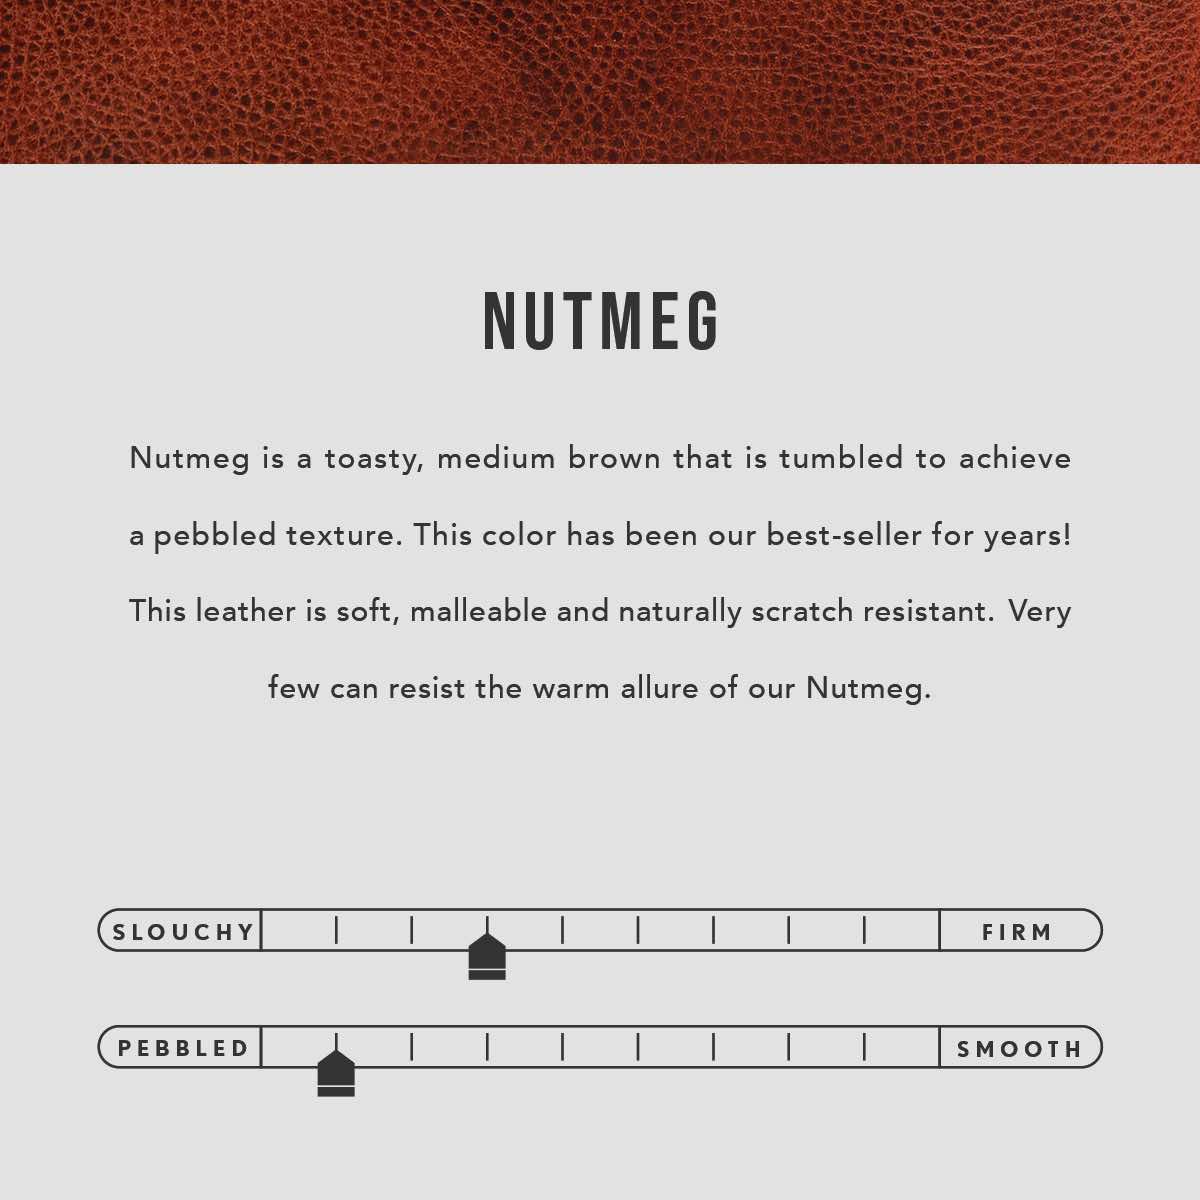 Nutmeg | infographic